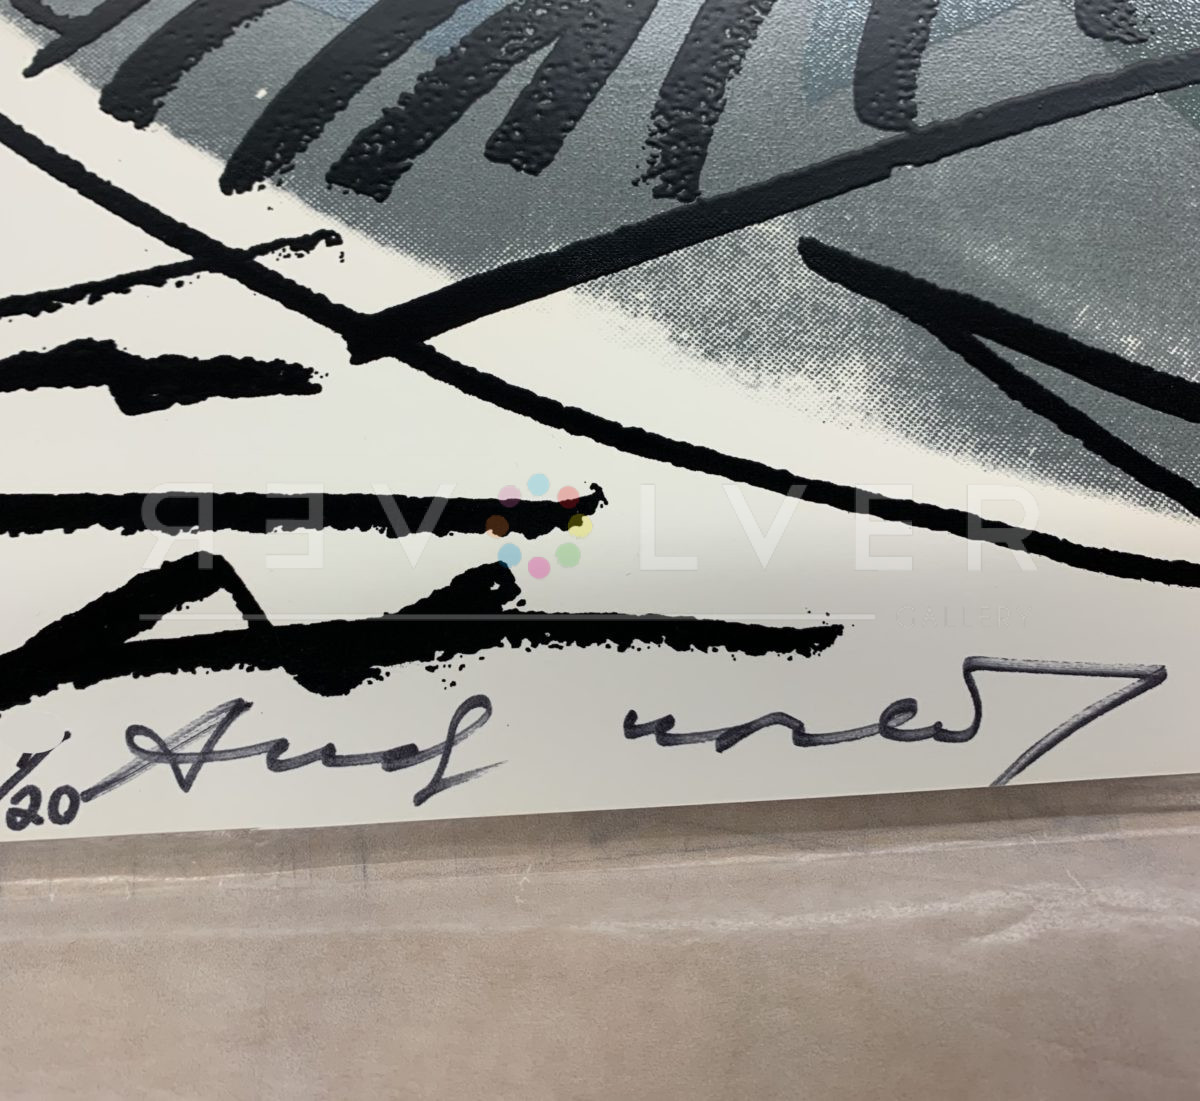 Andy Warhol's signature on the Gems 189 screenprint